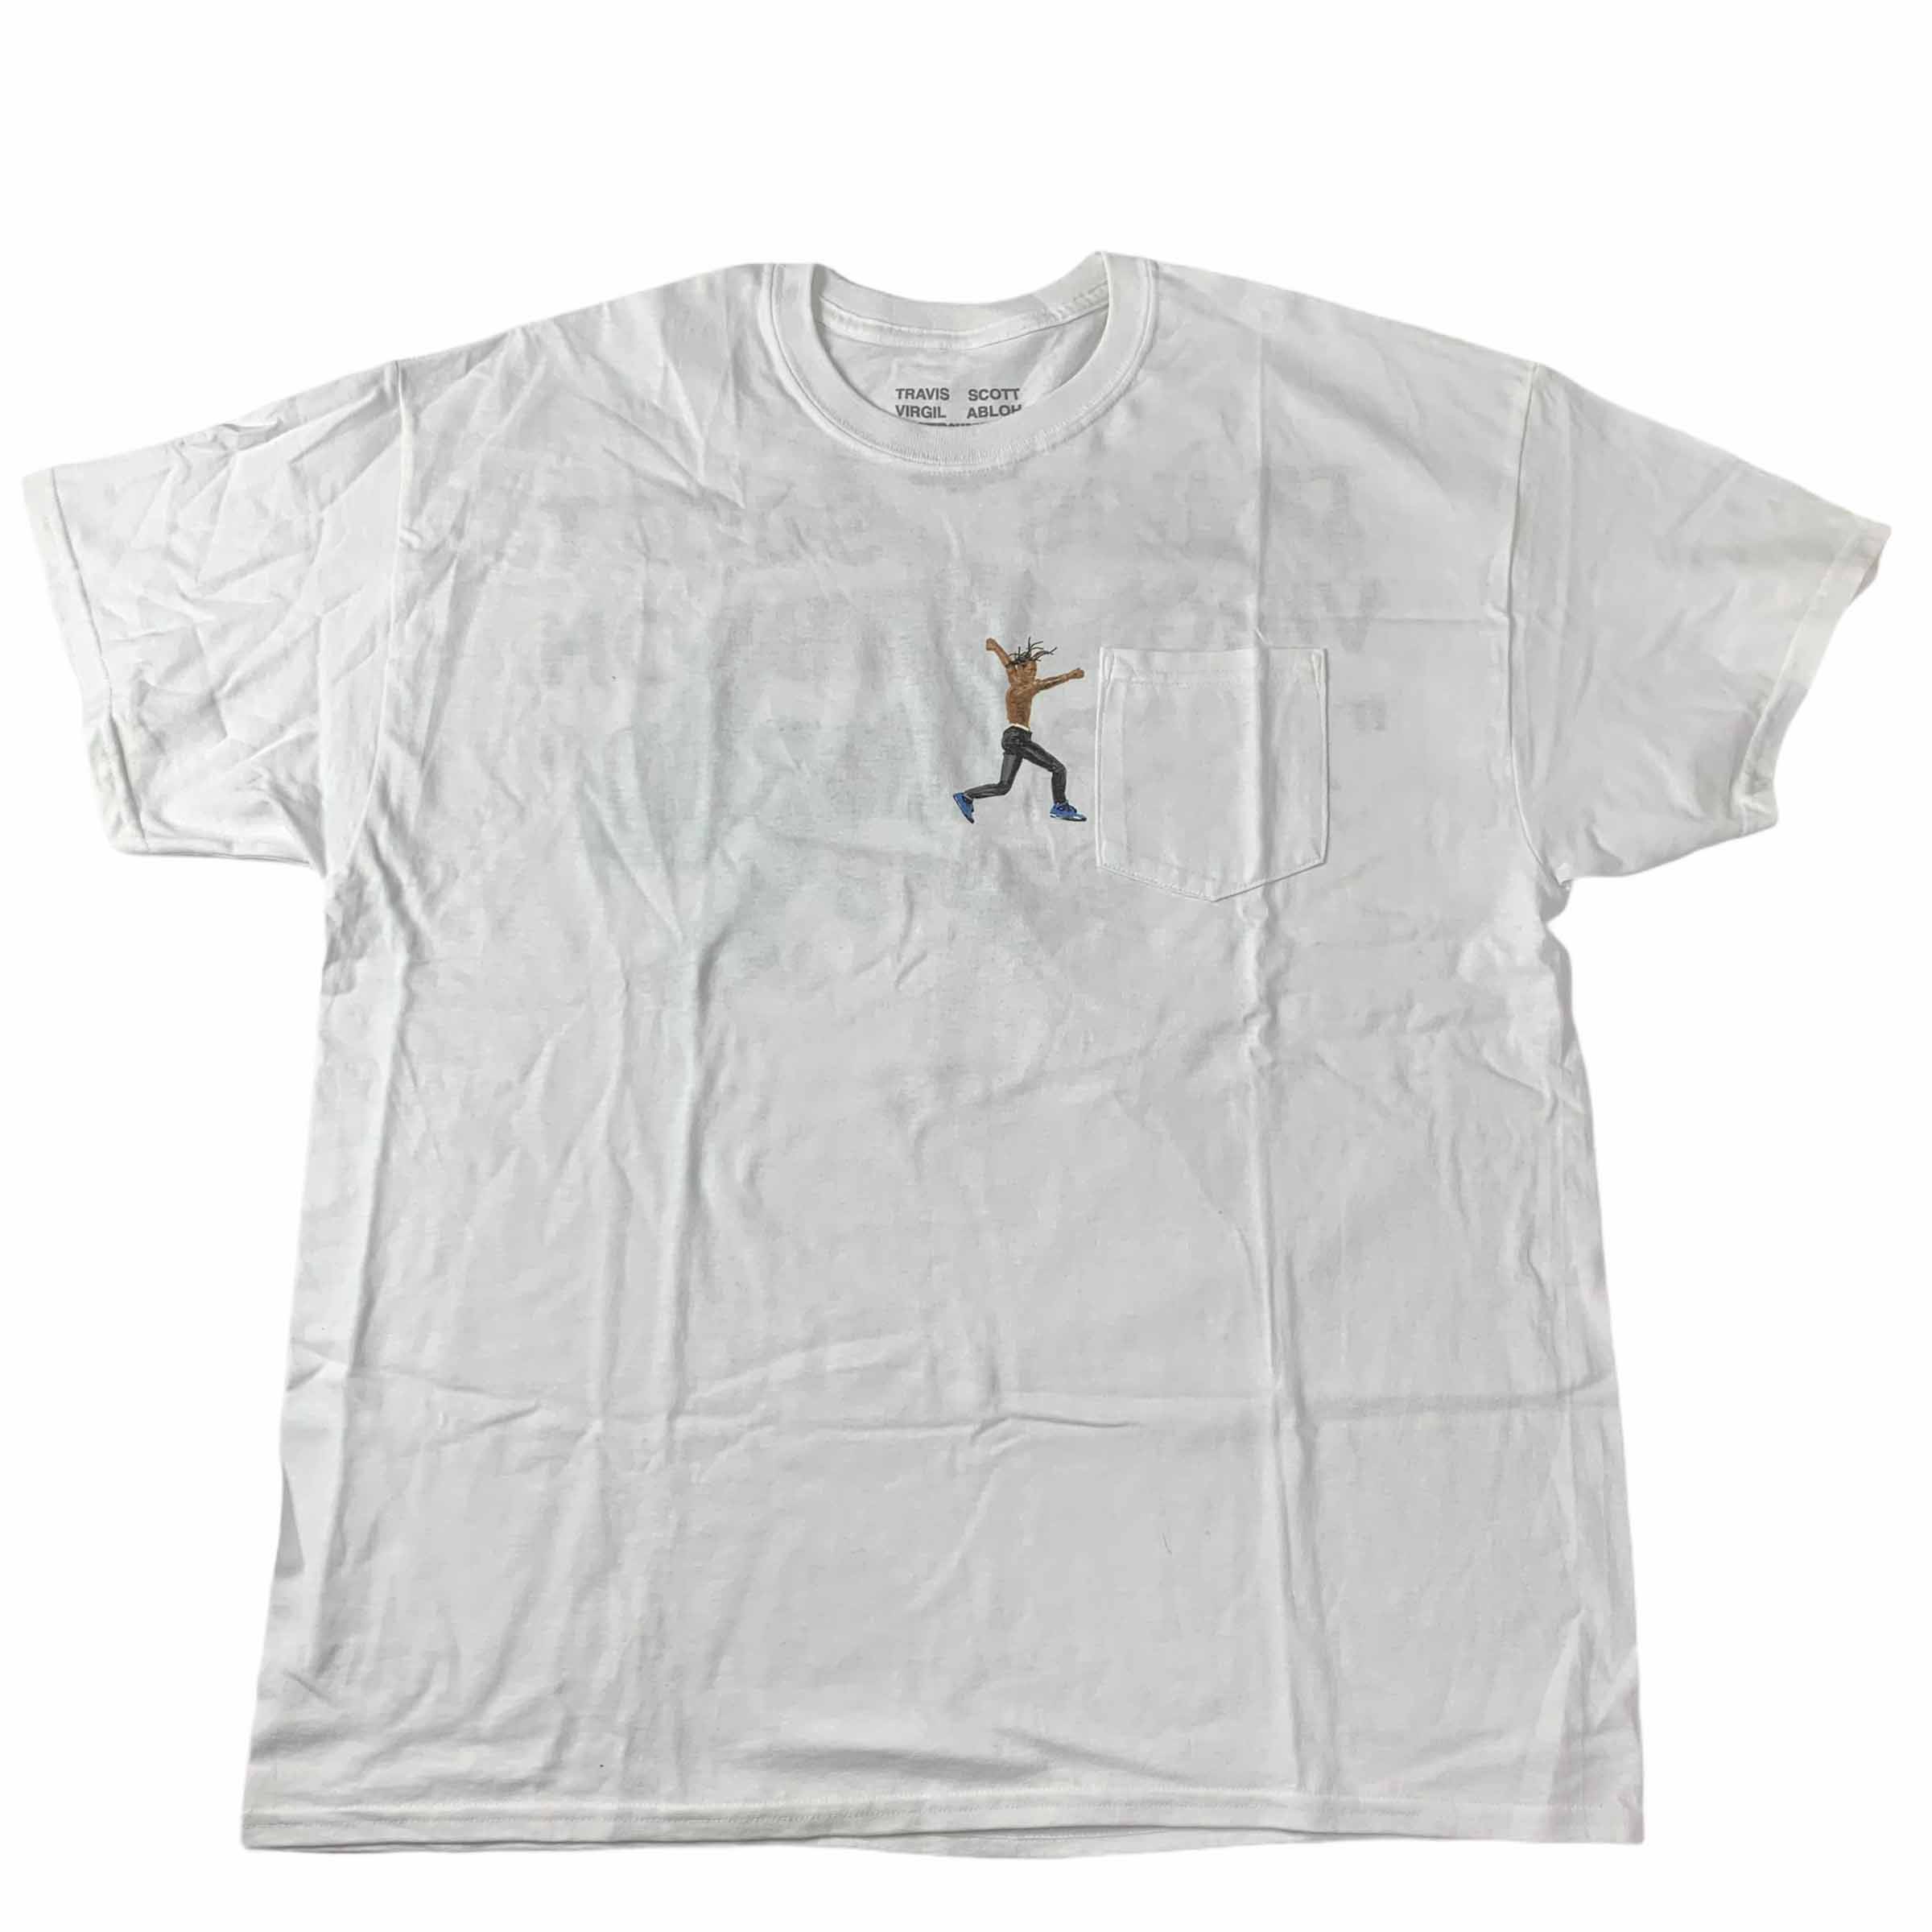 [ASTROWORLD3] Travis Scott X Vergil Abloh Print Pocket T-Shirt - Size XL